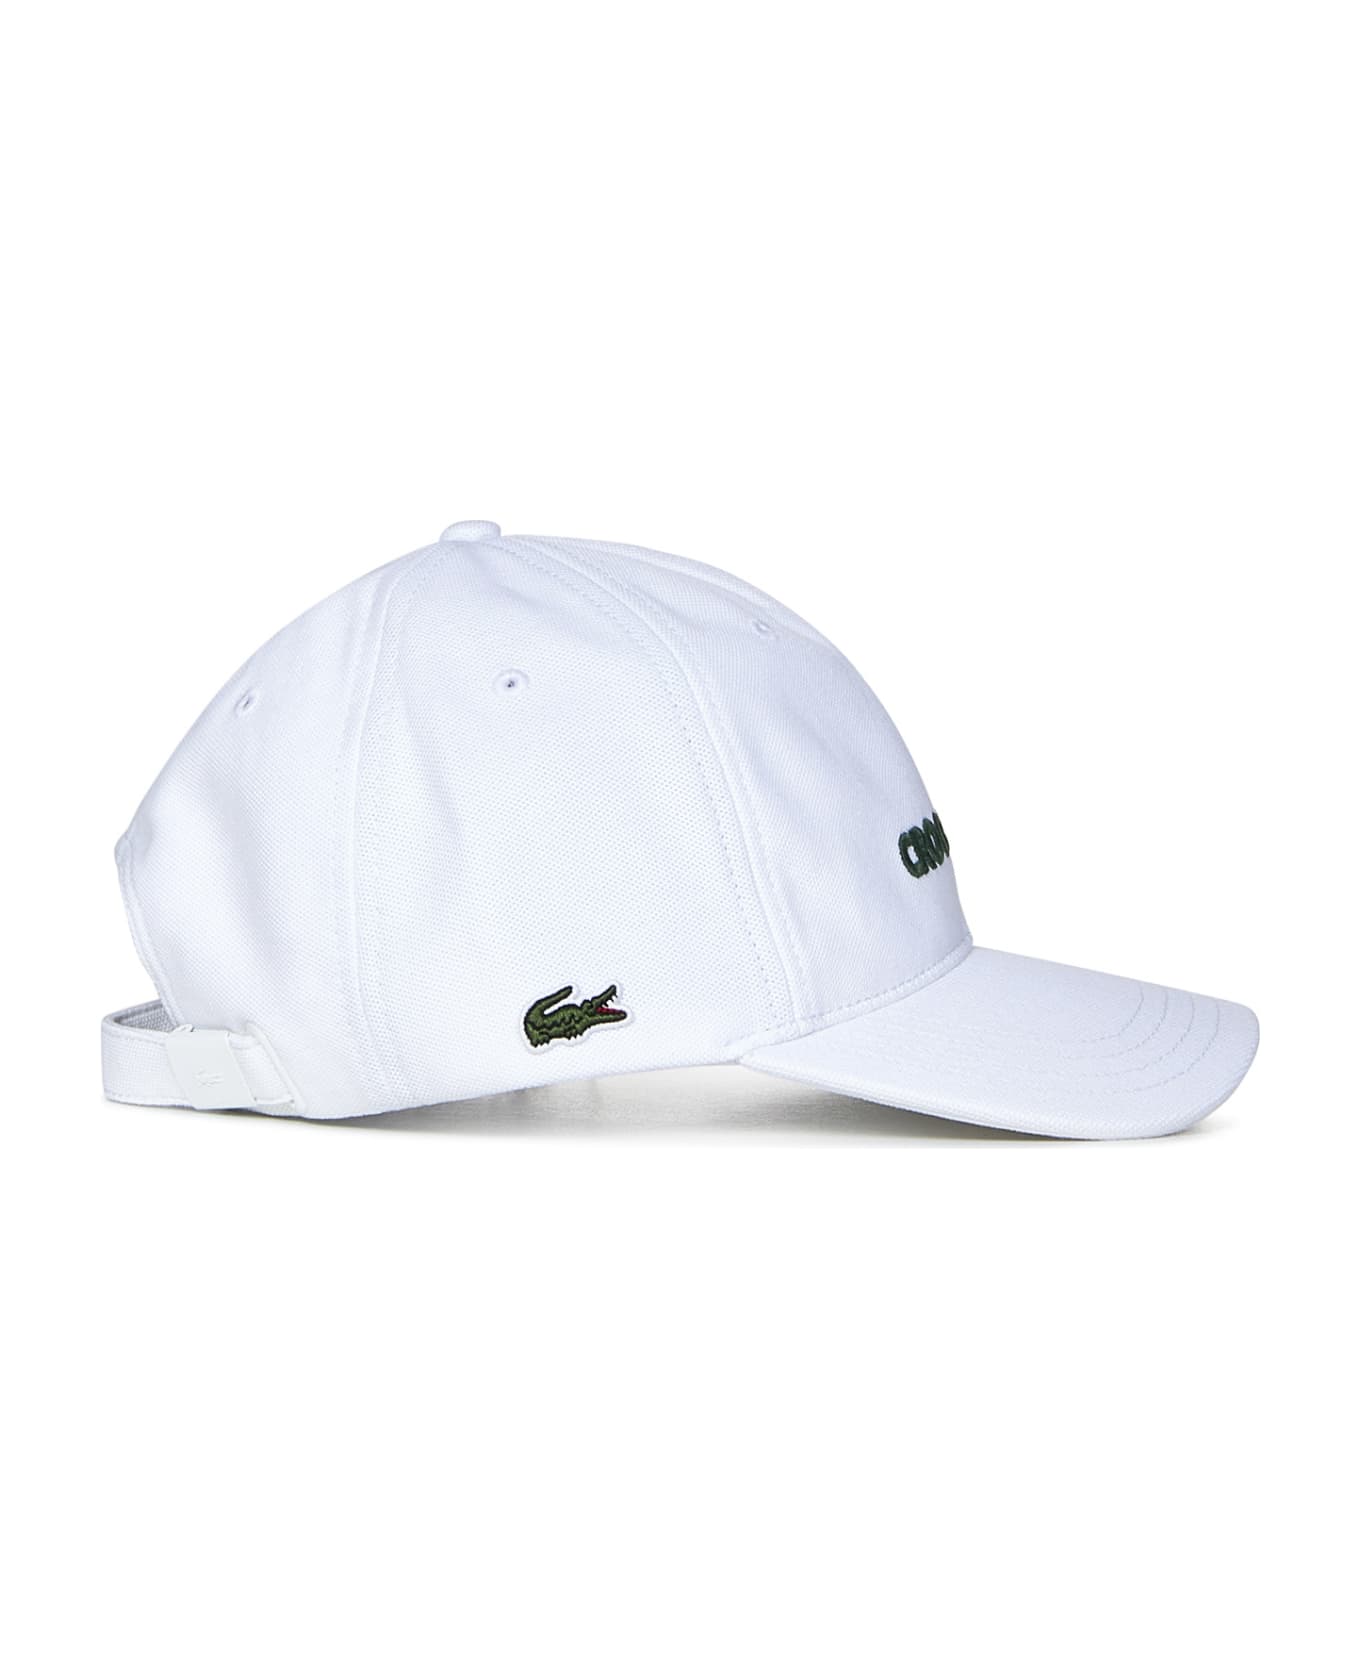 Lacoste Hat - White